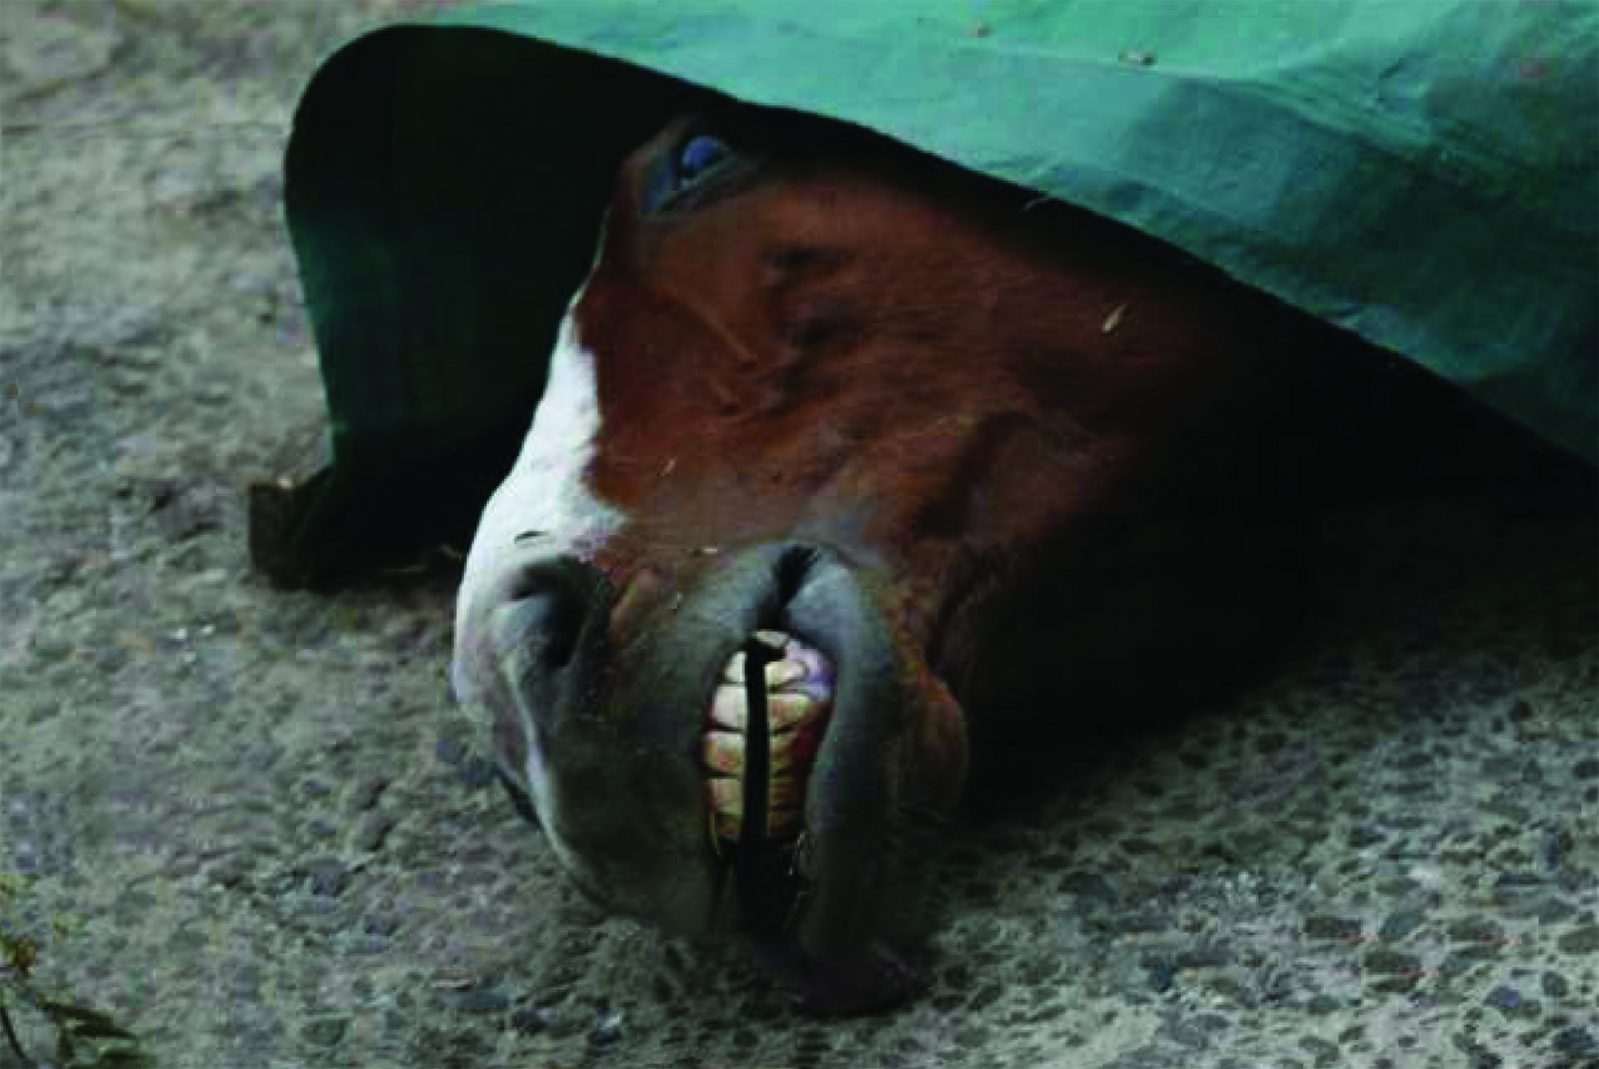 Shocking halfyear race horse death figures highlight serious welfare